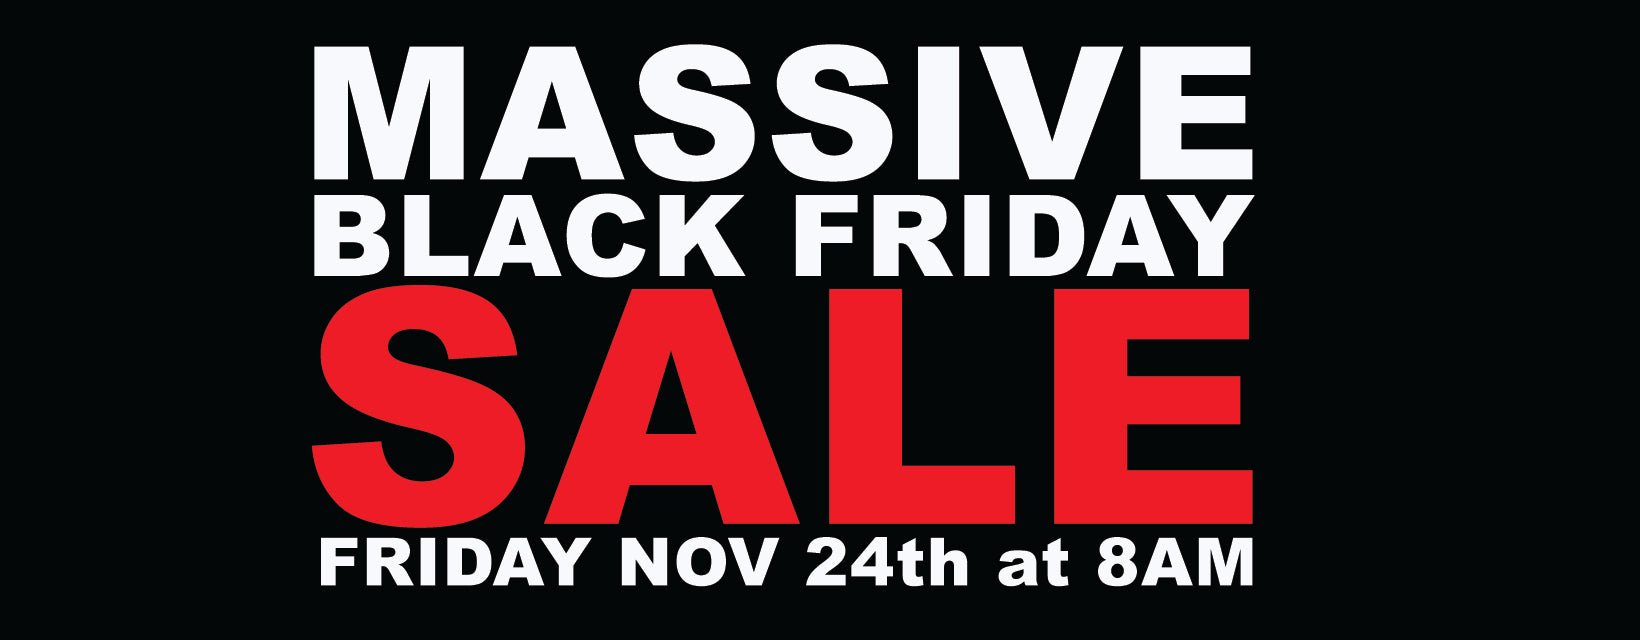 Massive Black Friday Sale